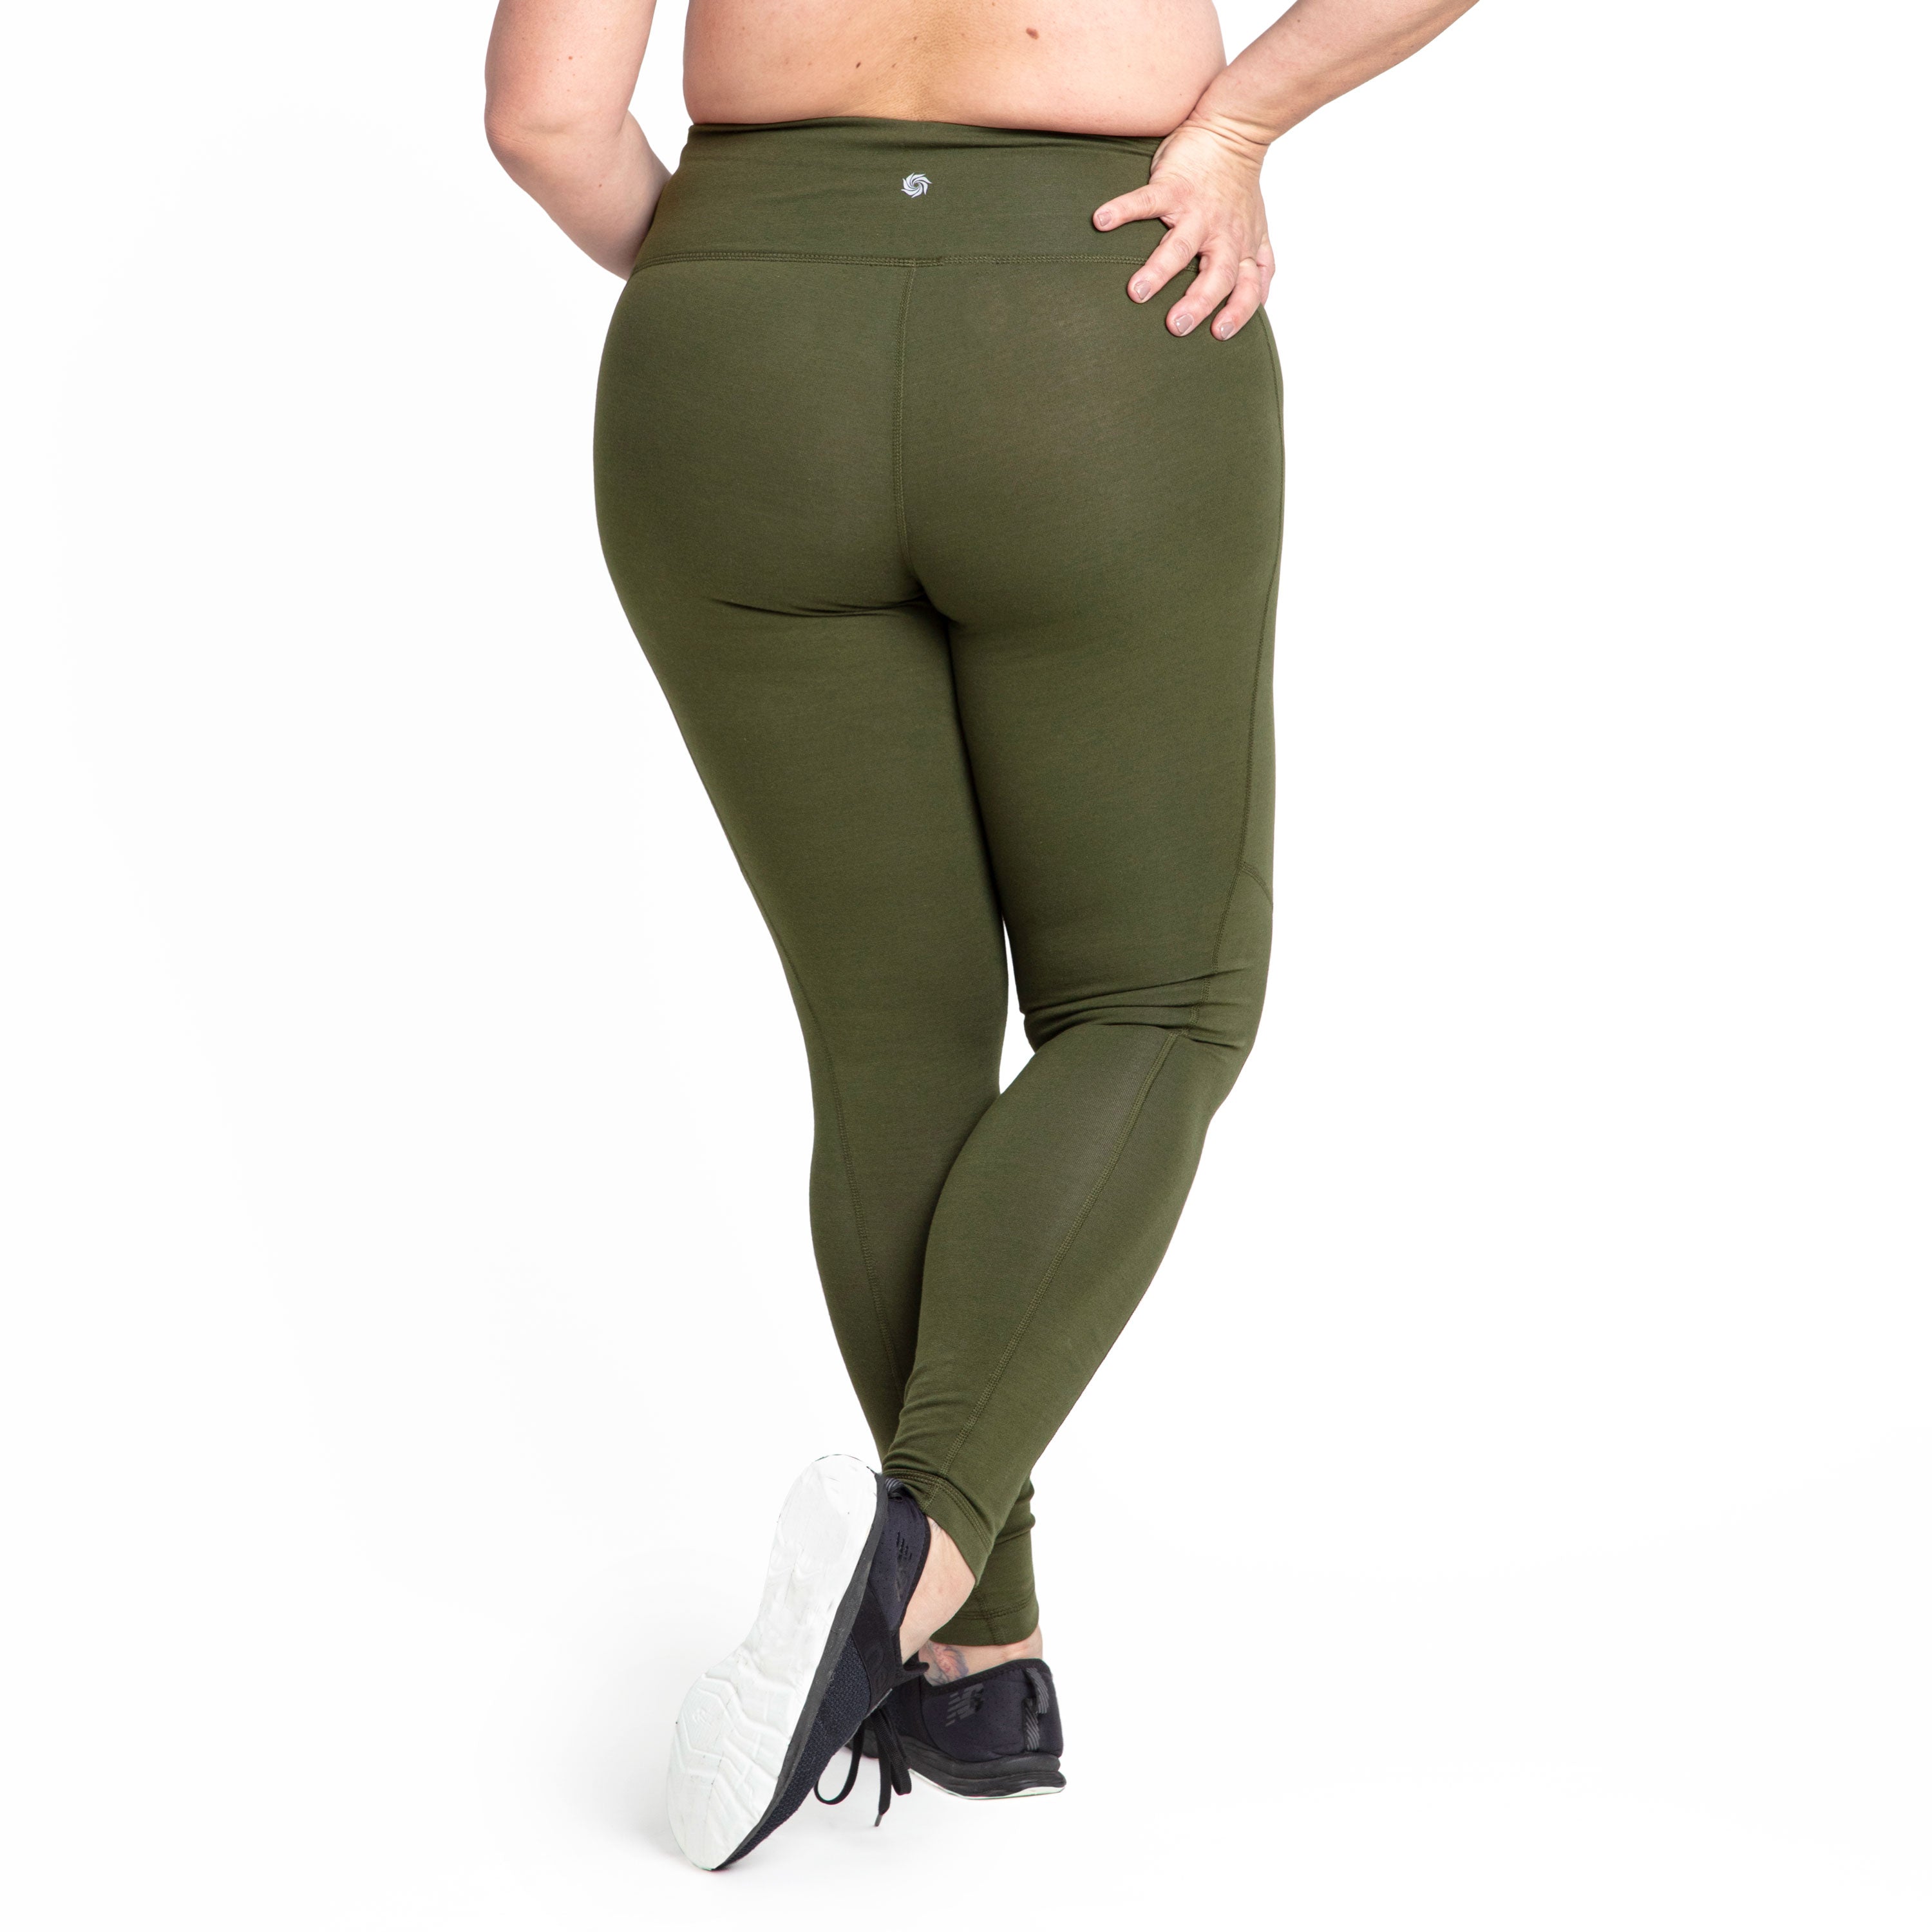 Baocc Yoga Pants Women Full Length Yoga Leggings, Women's High Waisted  Workout Compression Pants Pants for Women Army Green M